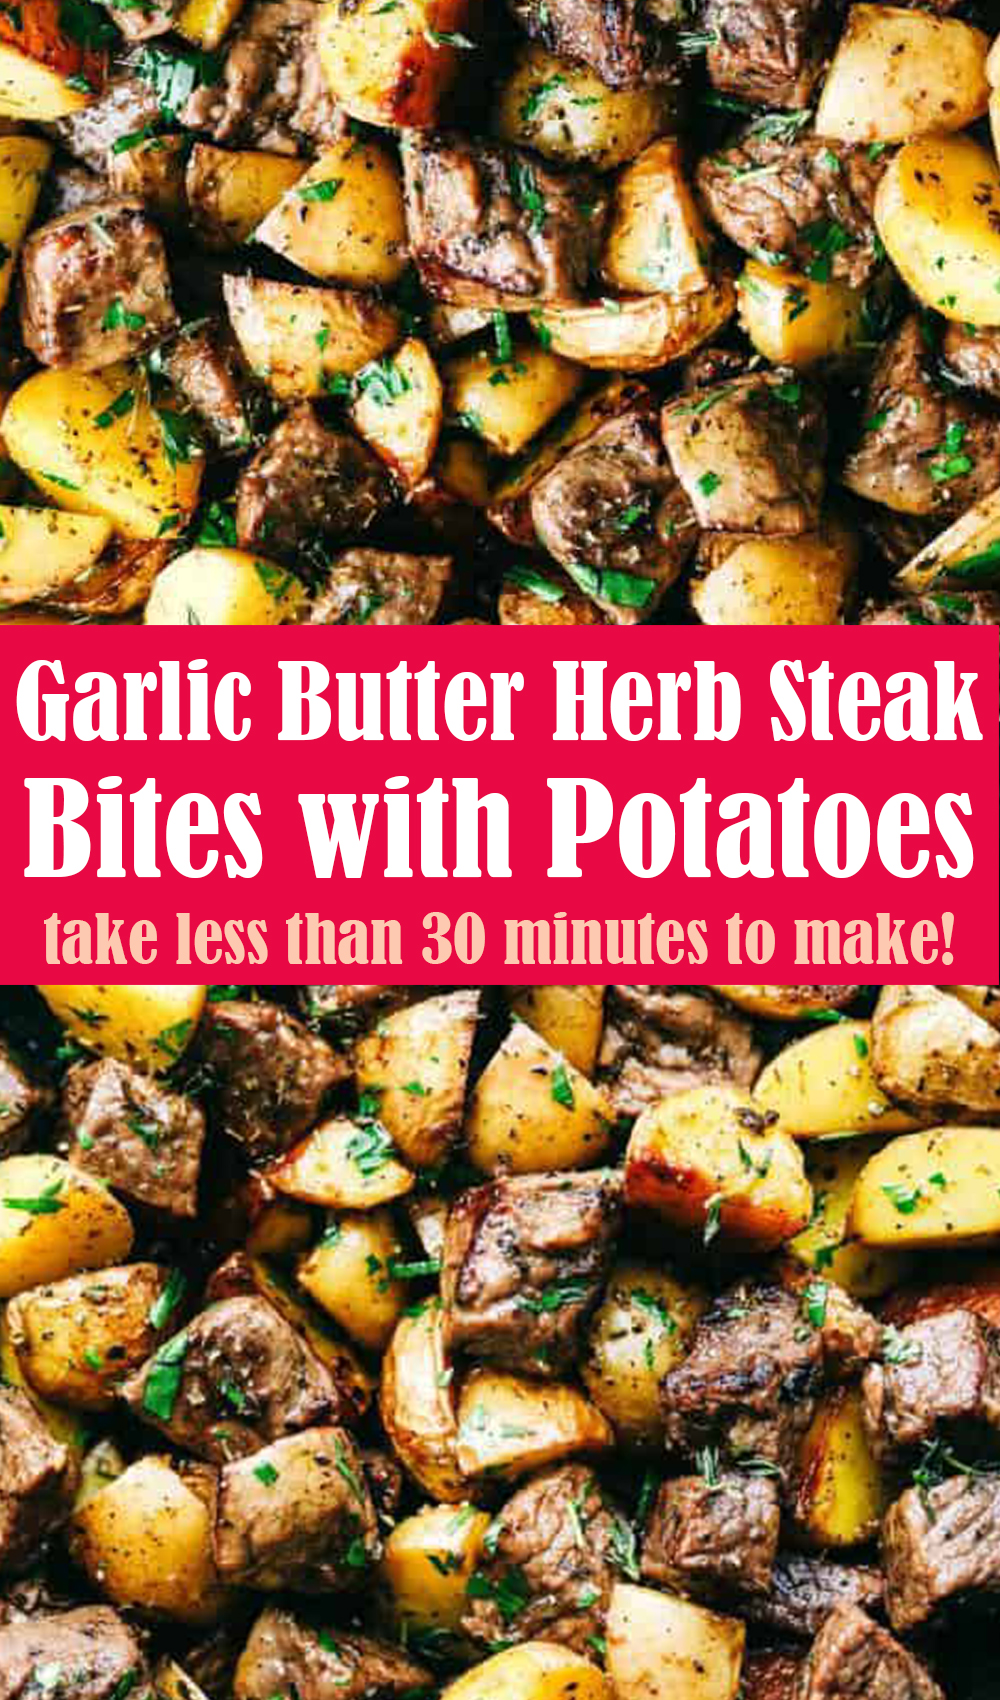 Garlic Butter Herb Steak Bites with Potatoes Recipe